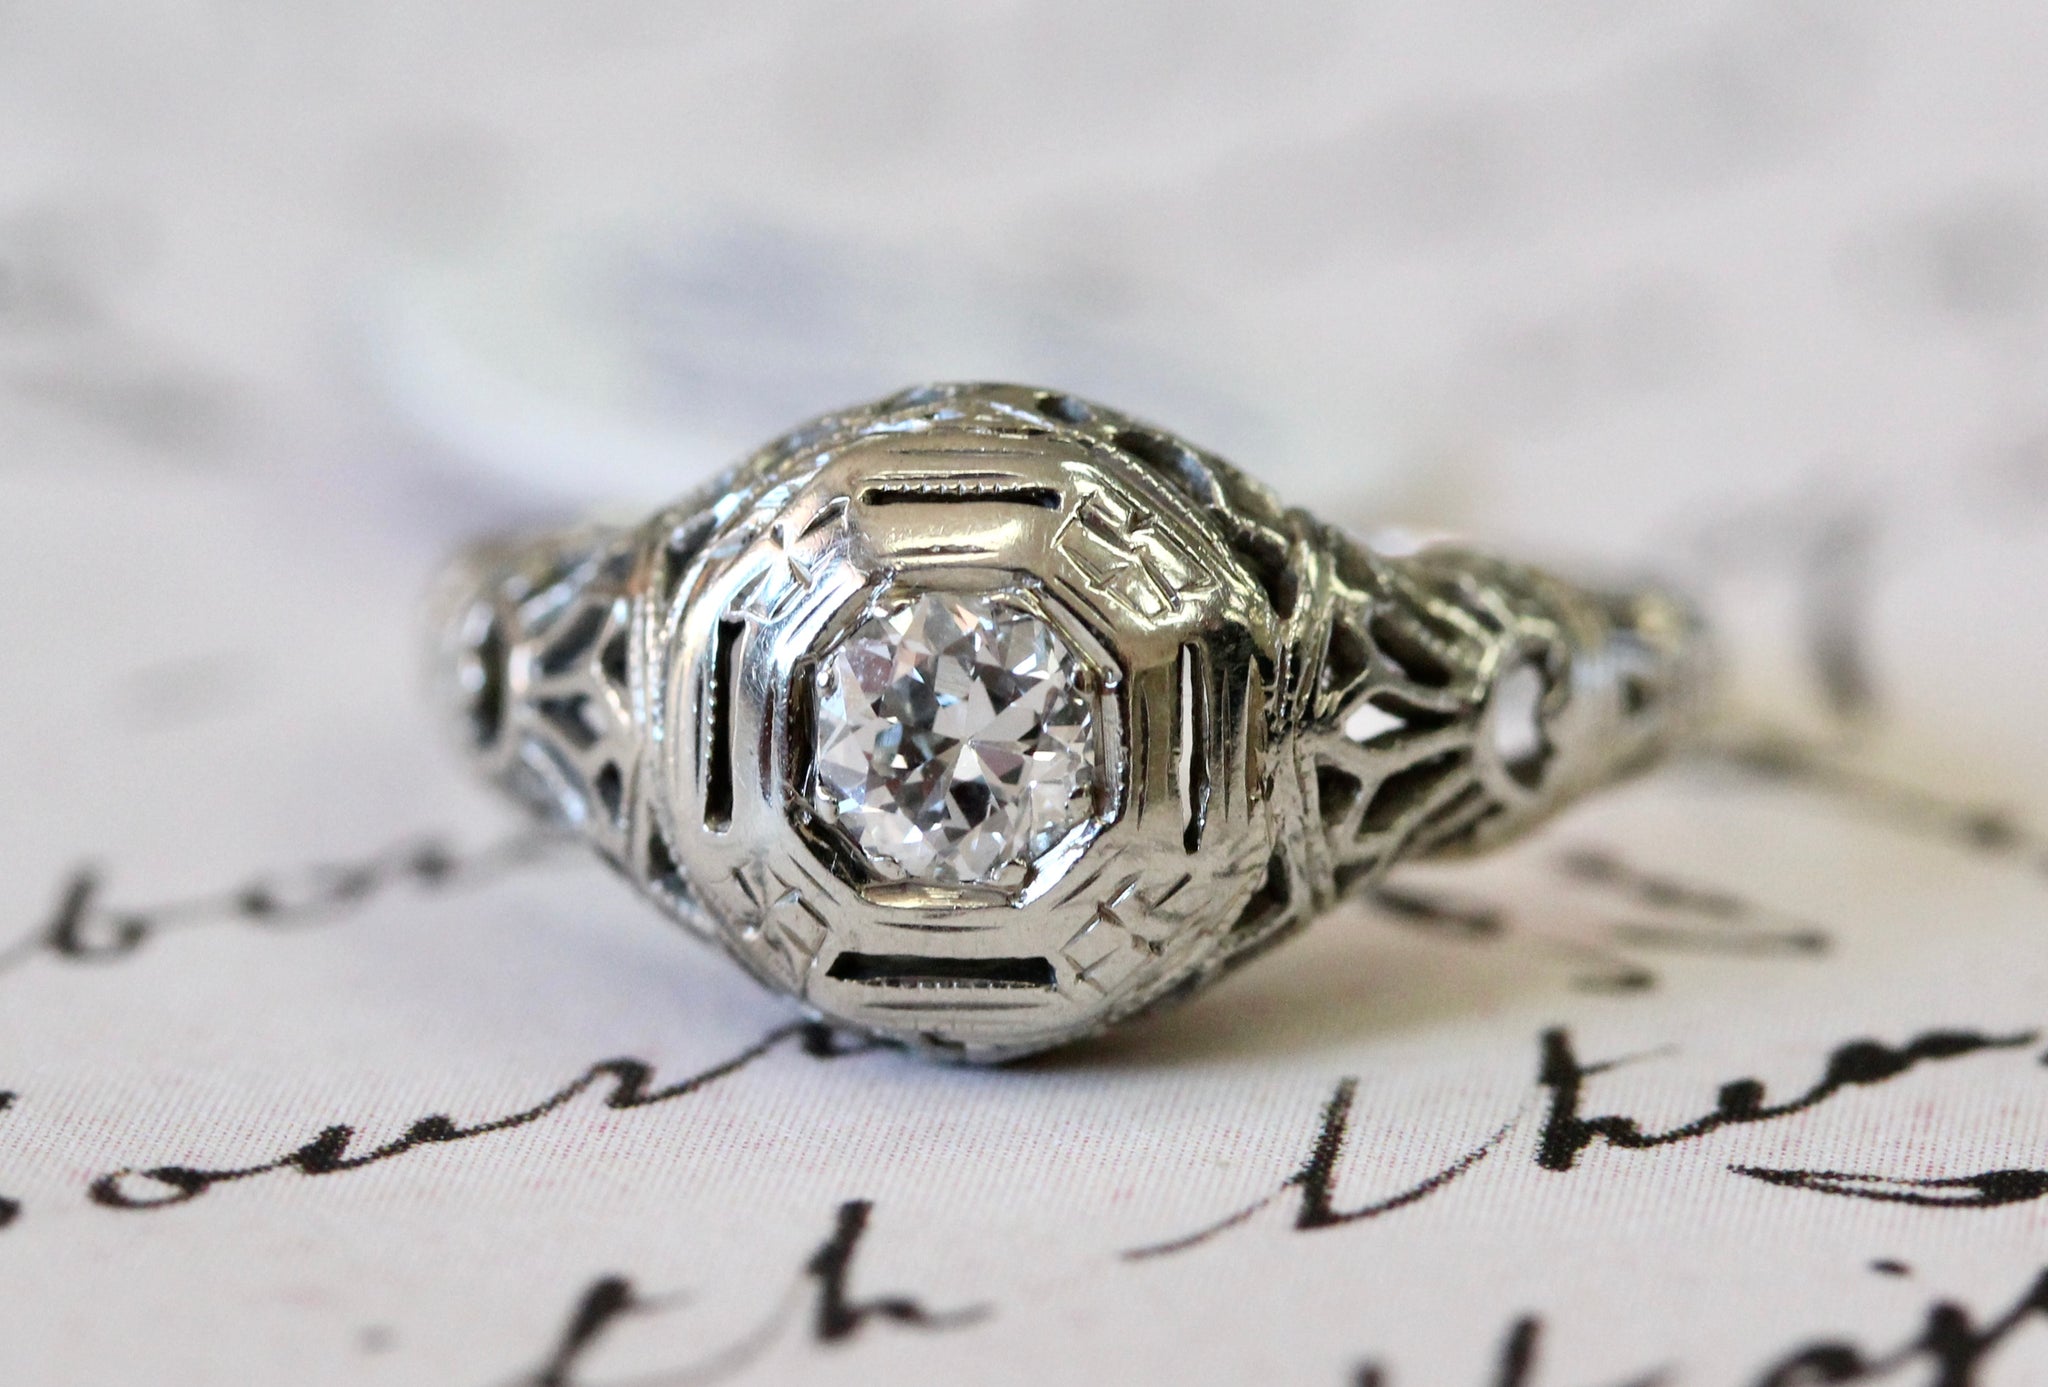 Men's Engagement 22Kt Gold Vintage Diamond Ring at Rs 875000 in Jaipur